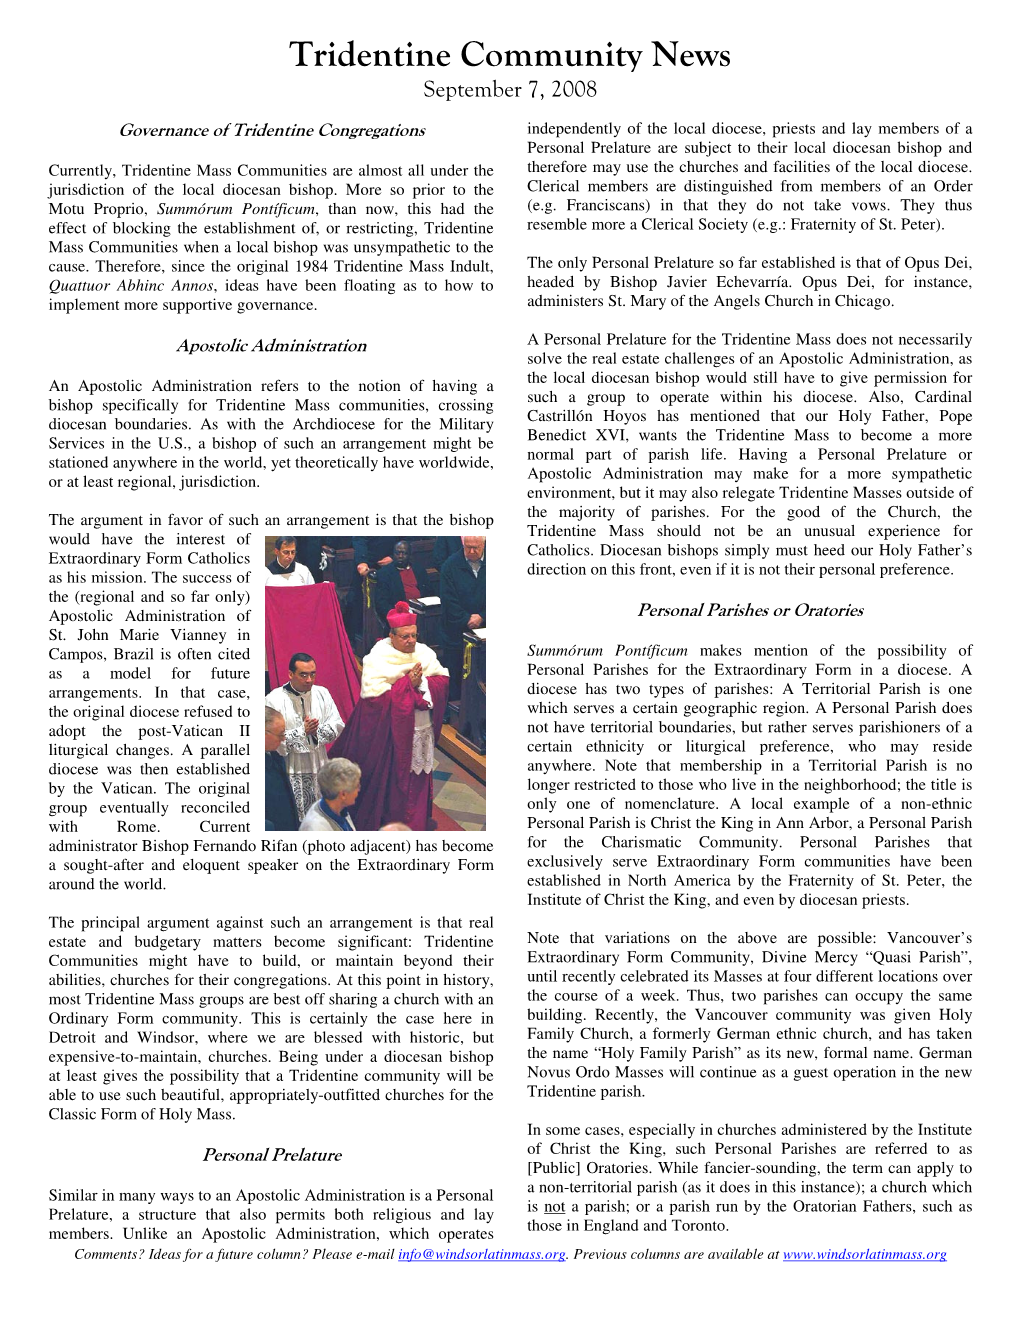 Tridentine Community News September 7, 2008